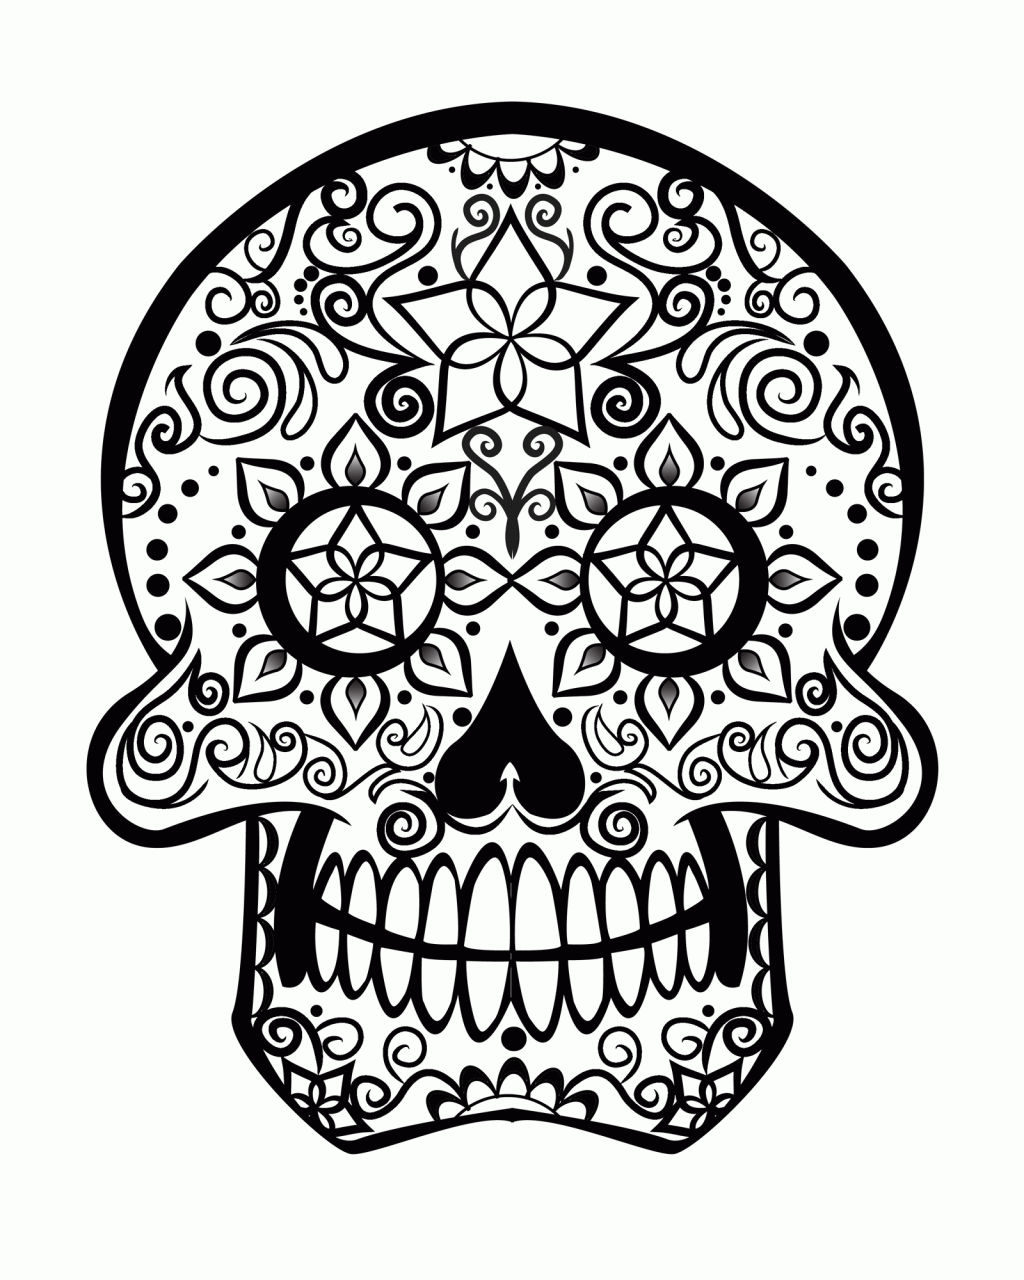 Sugar Skull Coloring Page Coloring Home